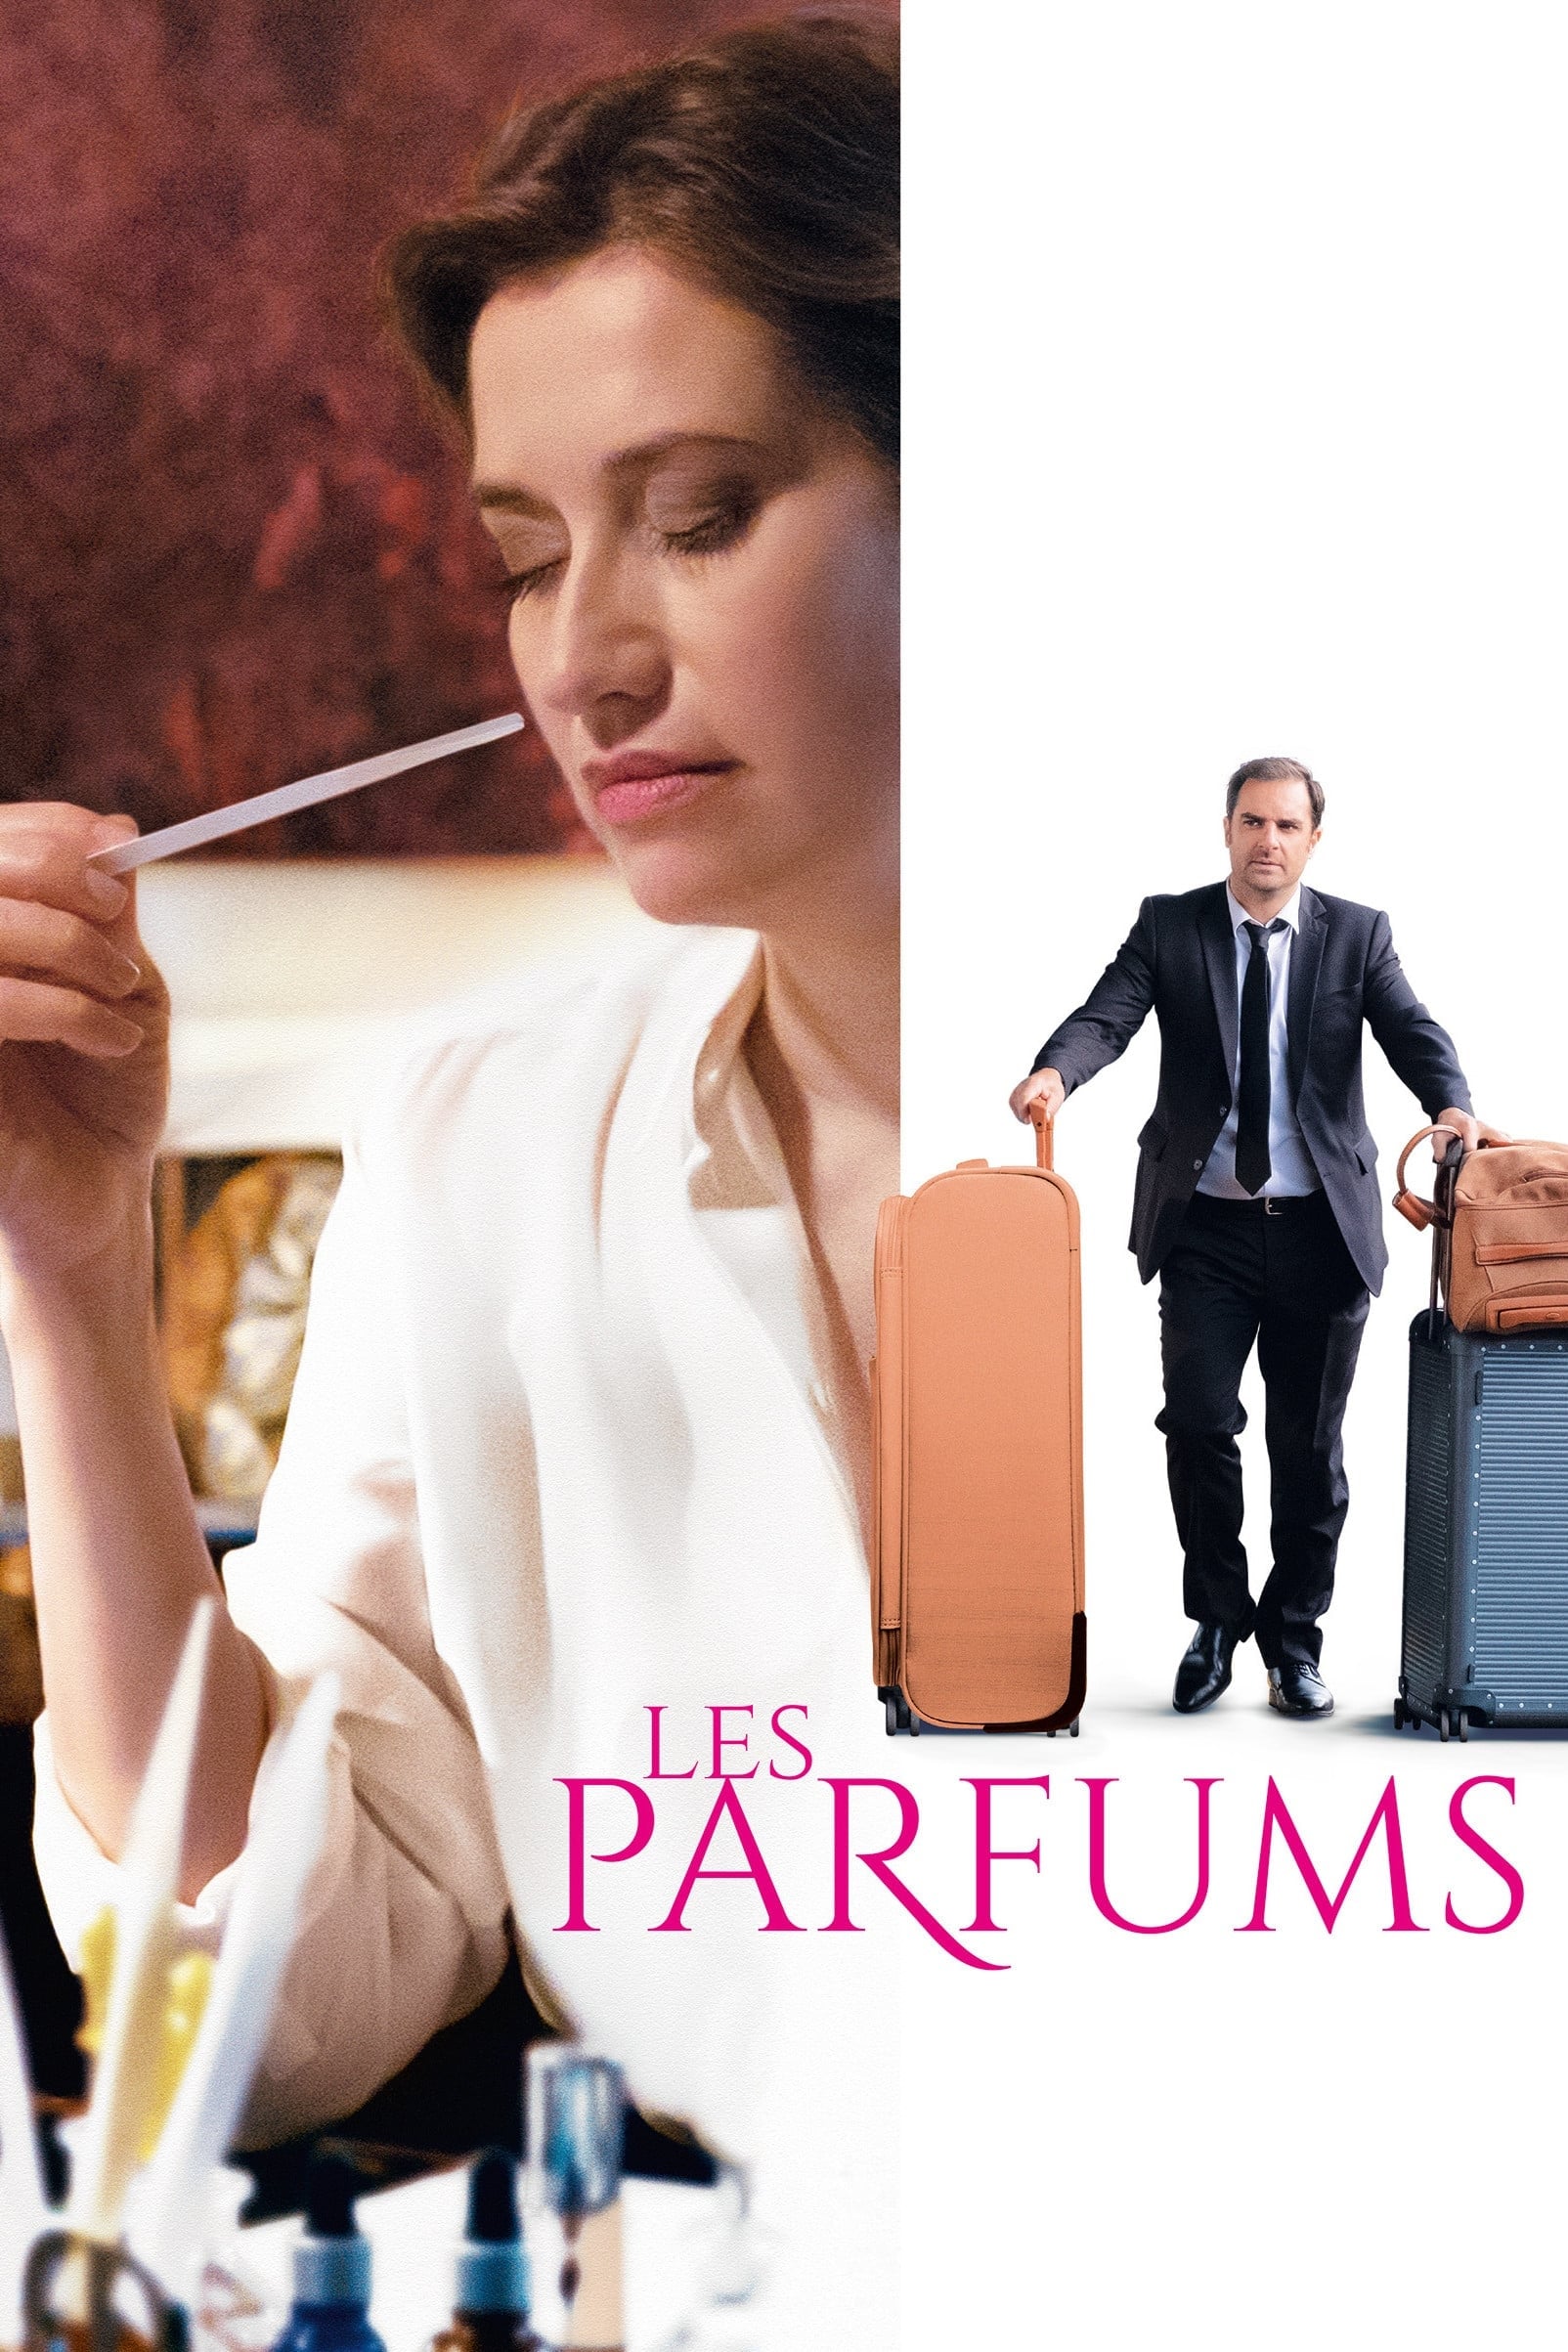 perfume full movie free download